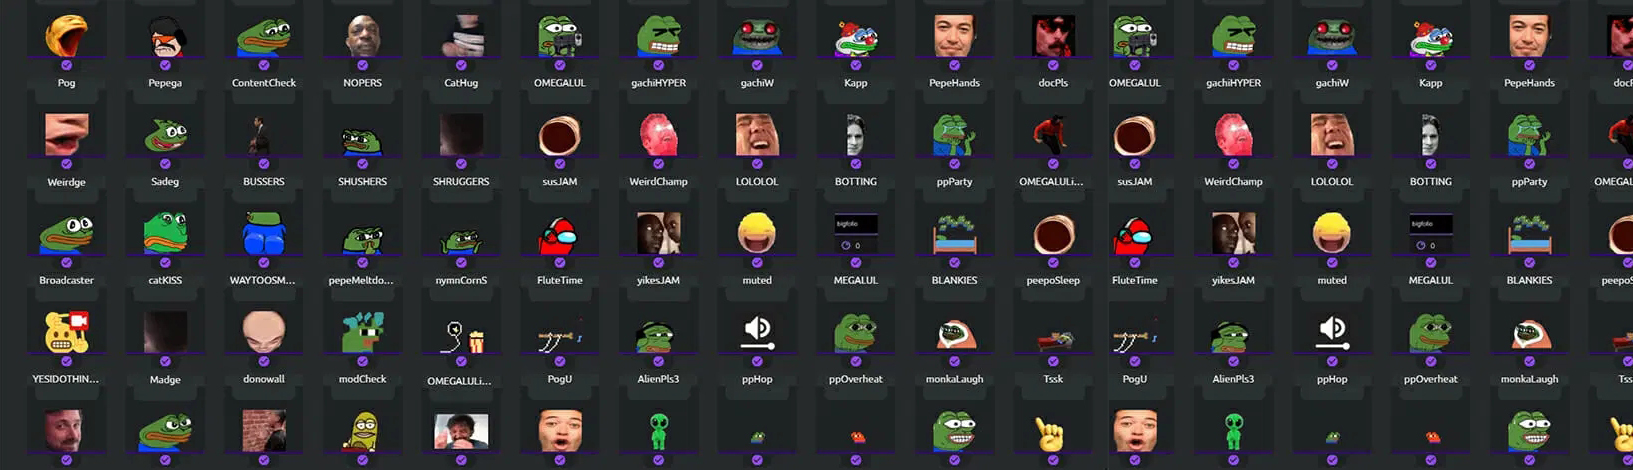 Players Create Twitch Emote Chat Addon - Community Spotlight thumbnail